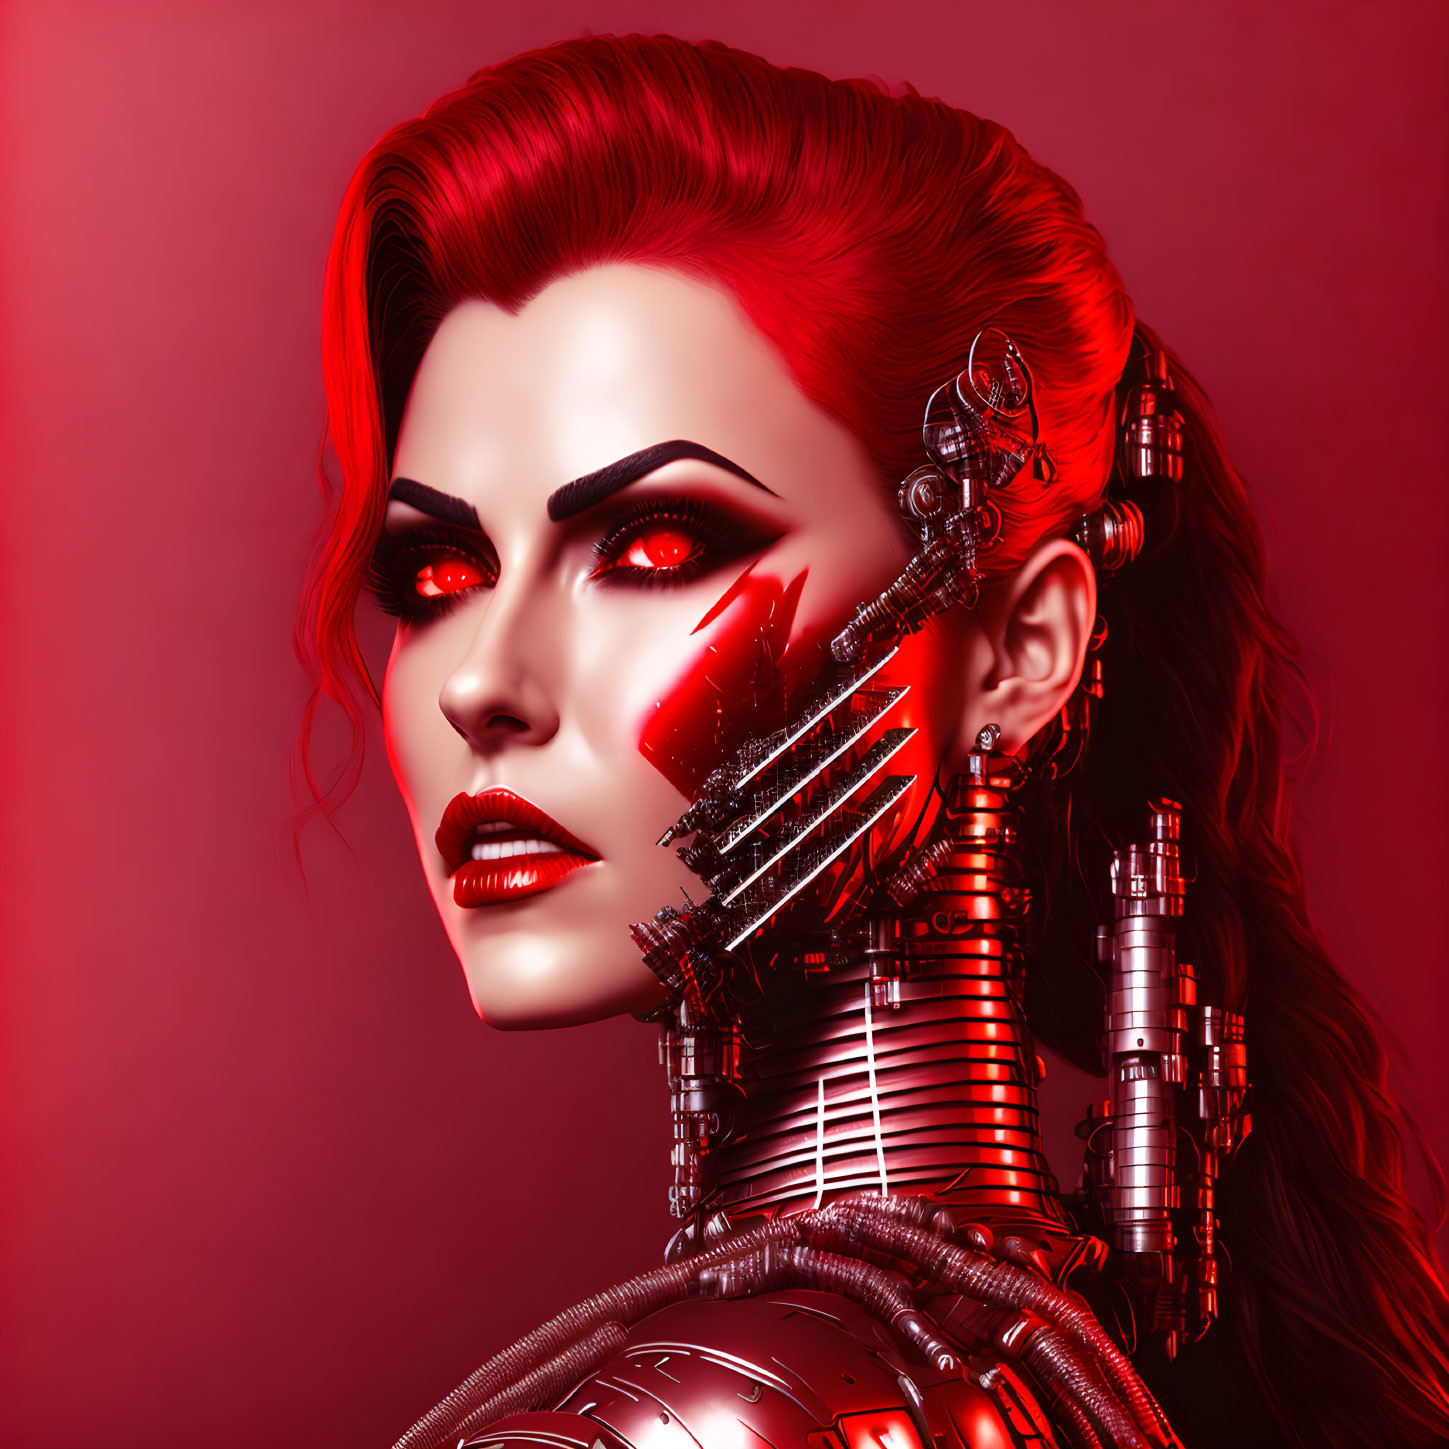 Detailed Female Cyborg Artwork Against Red Backdrop